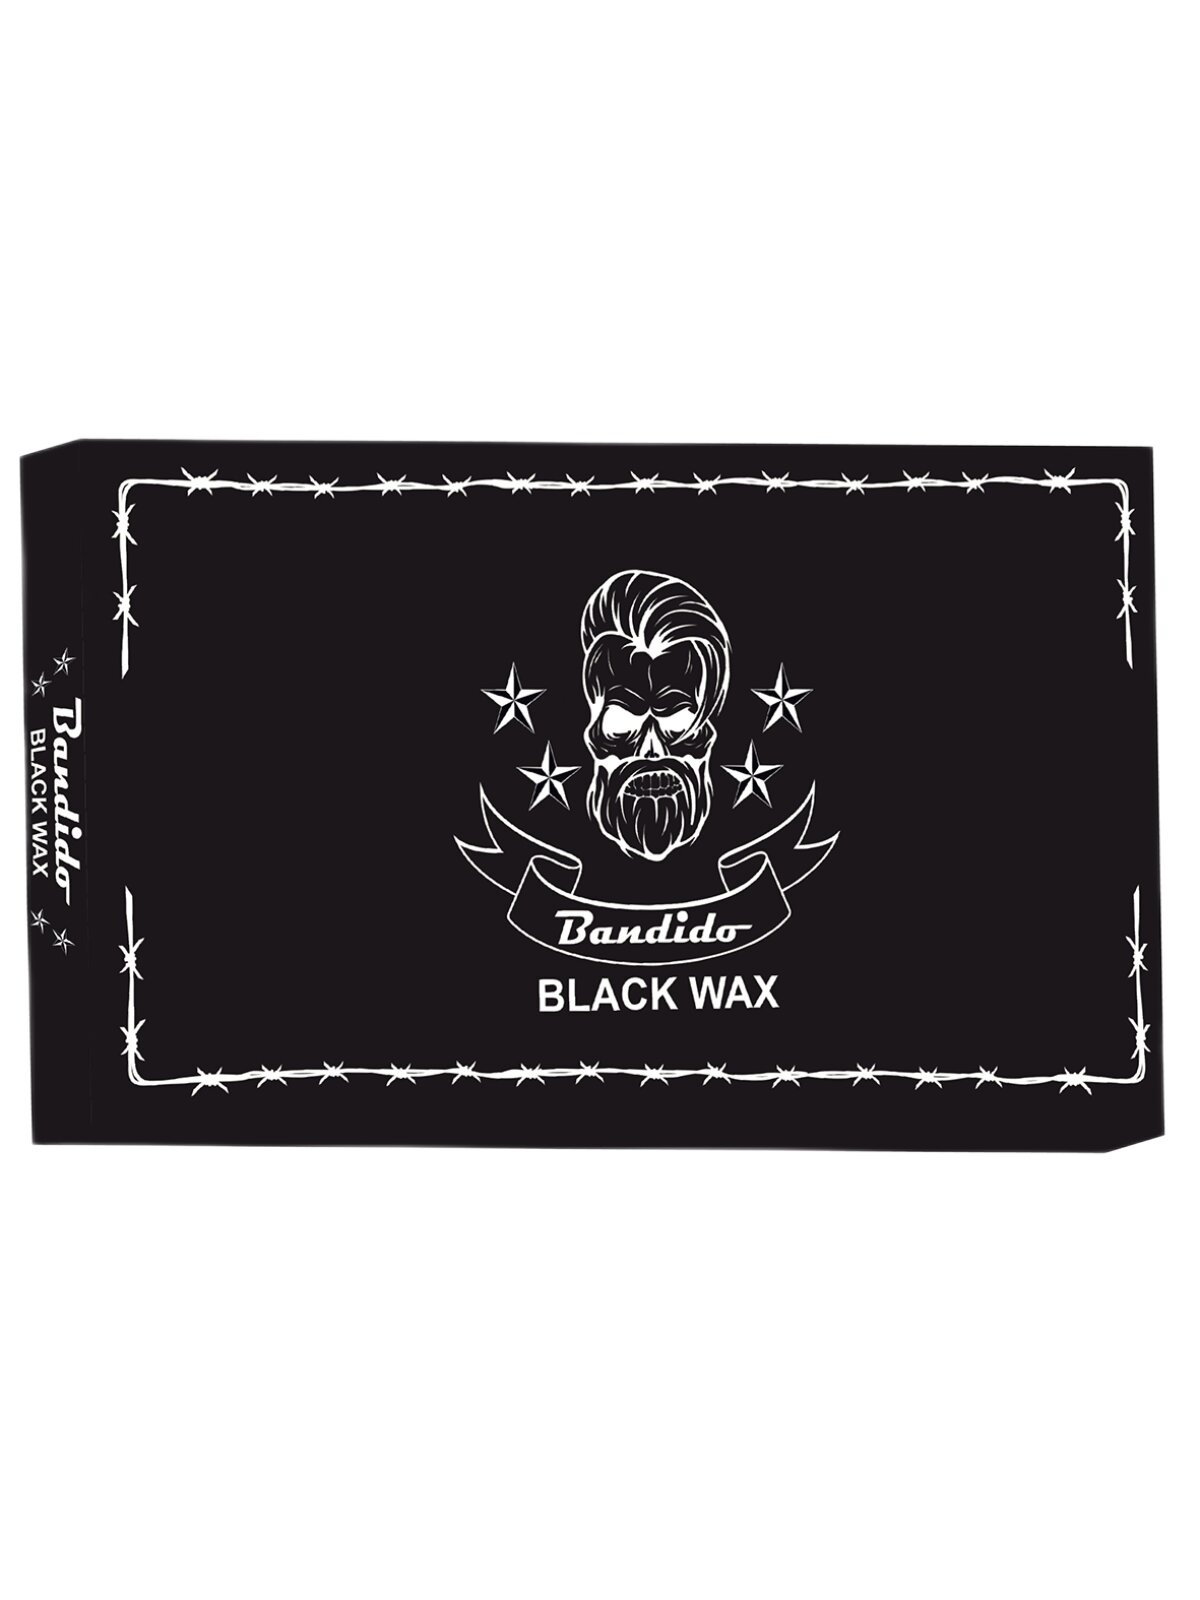 Bandido Black Wax - Quitaceras 500 ml